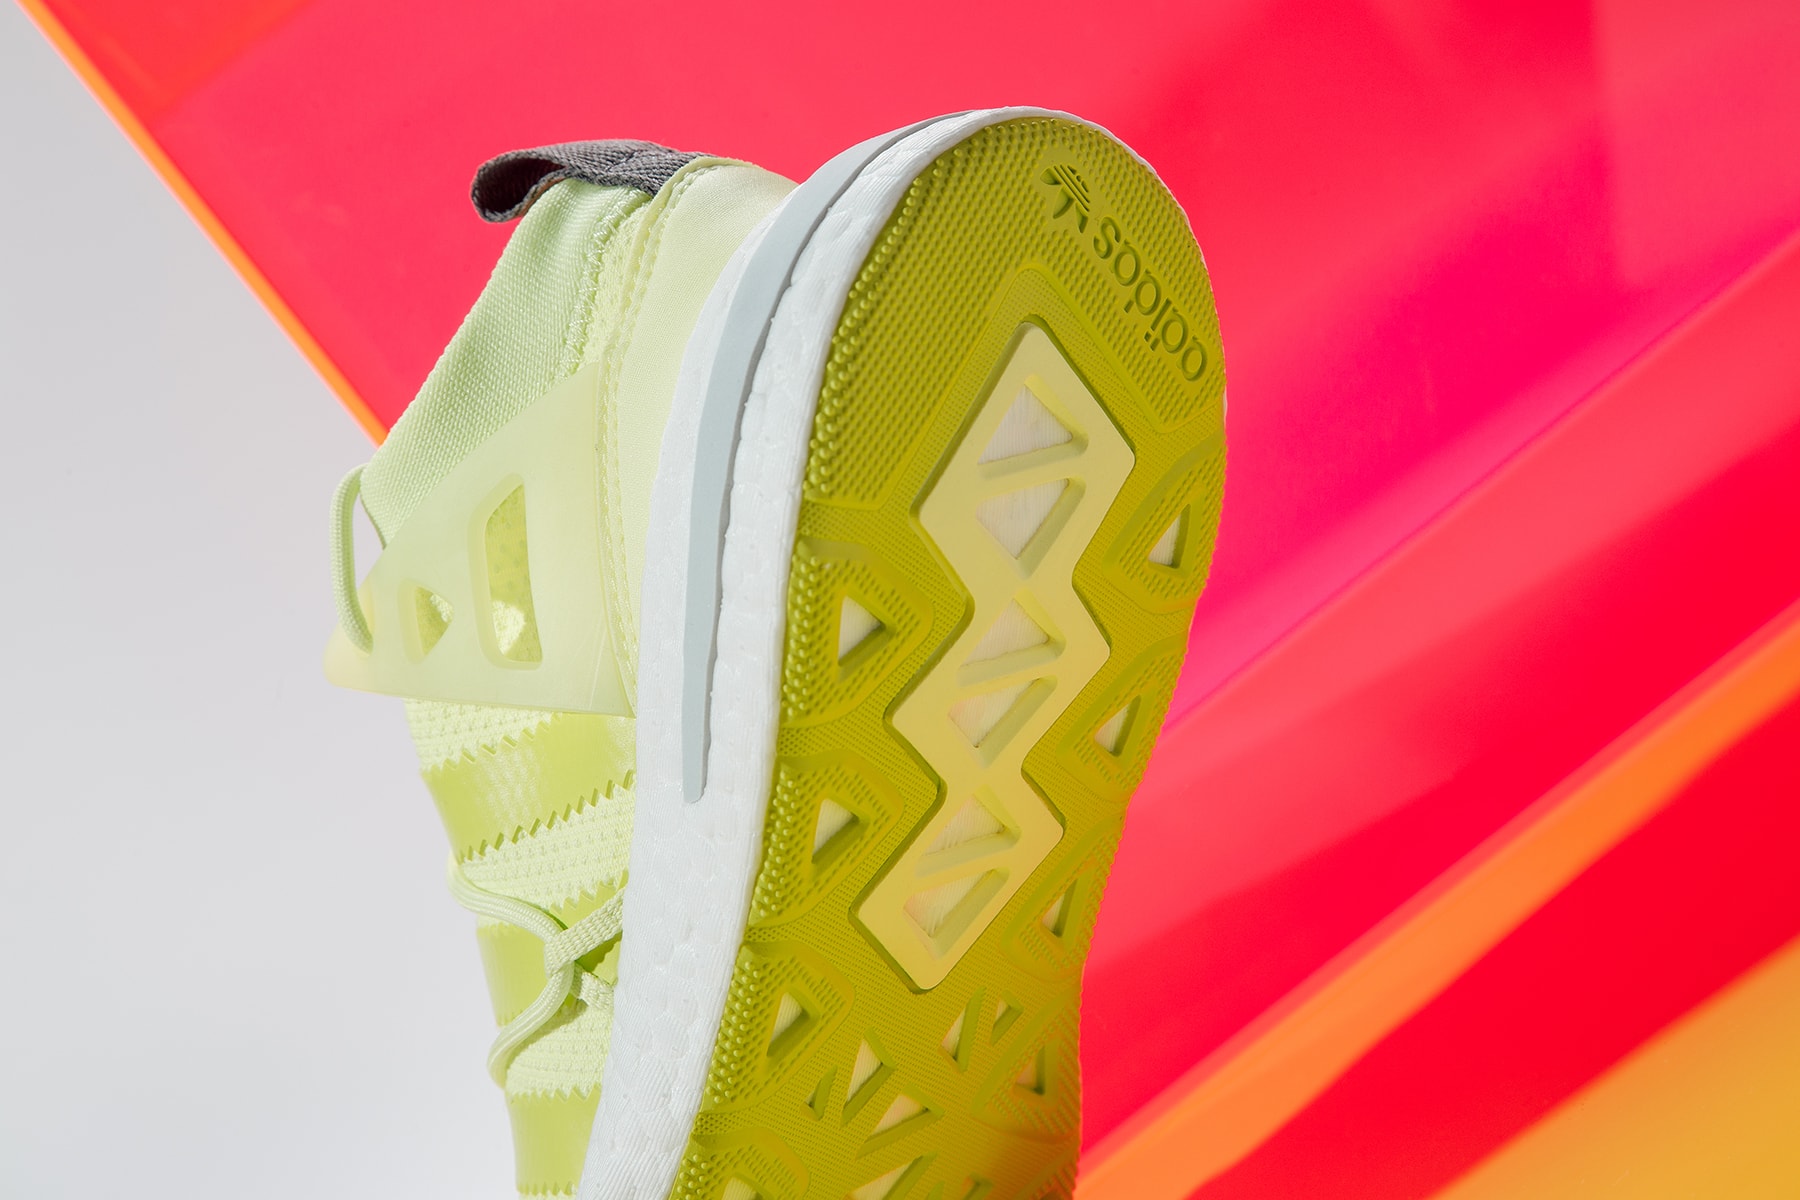 adidas originals arkyn closer look clear orange solar yellow primeknit